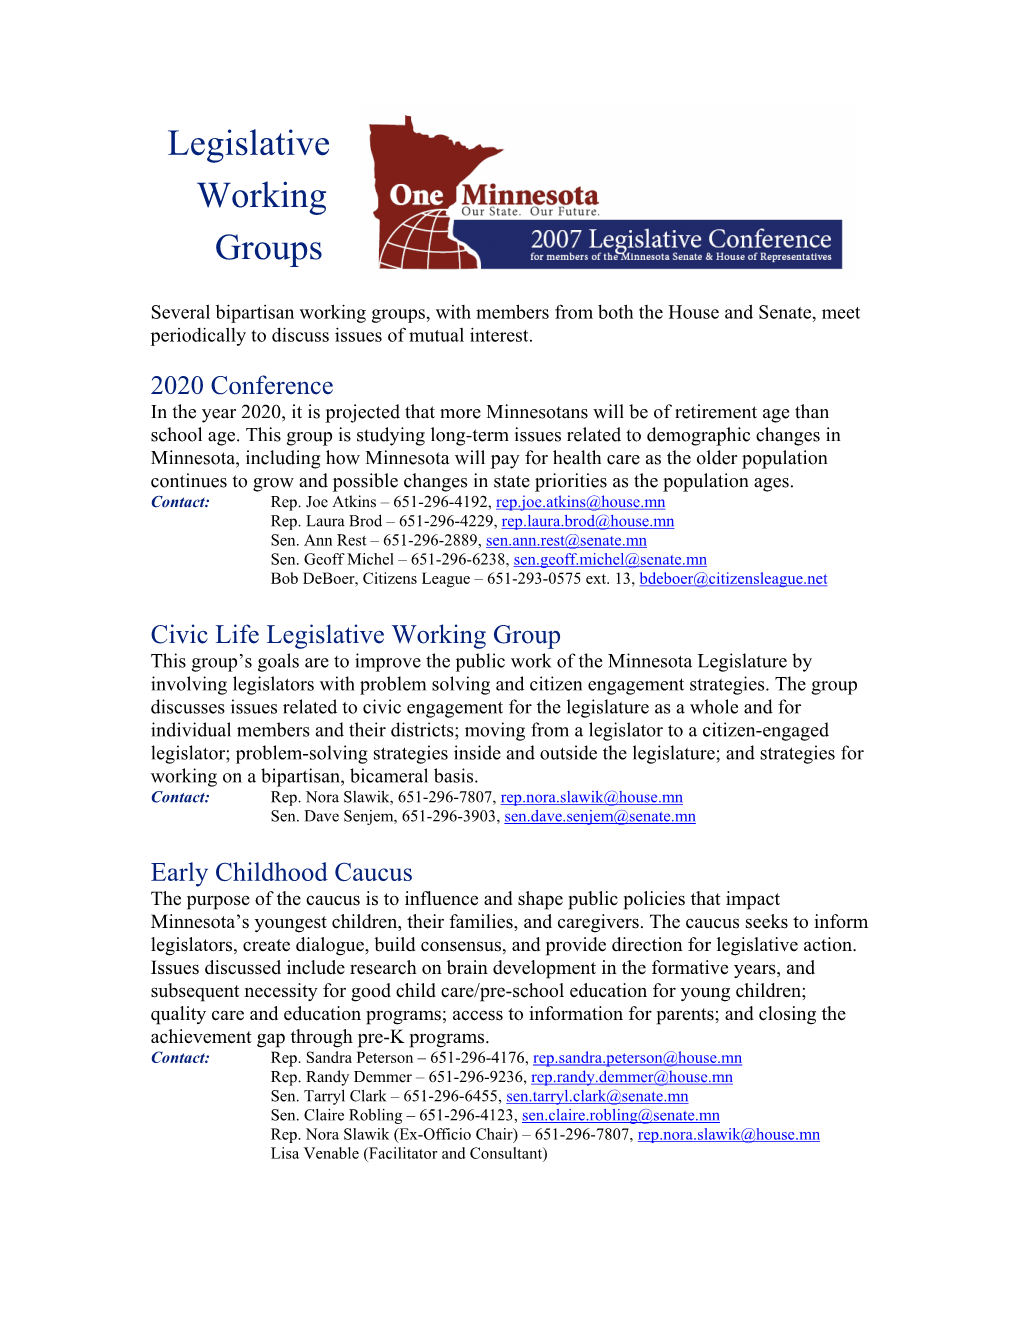 Legislative Working Groups